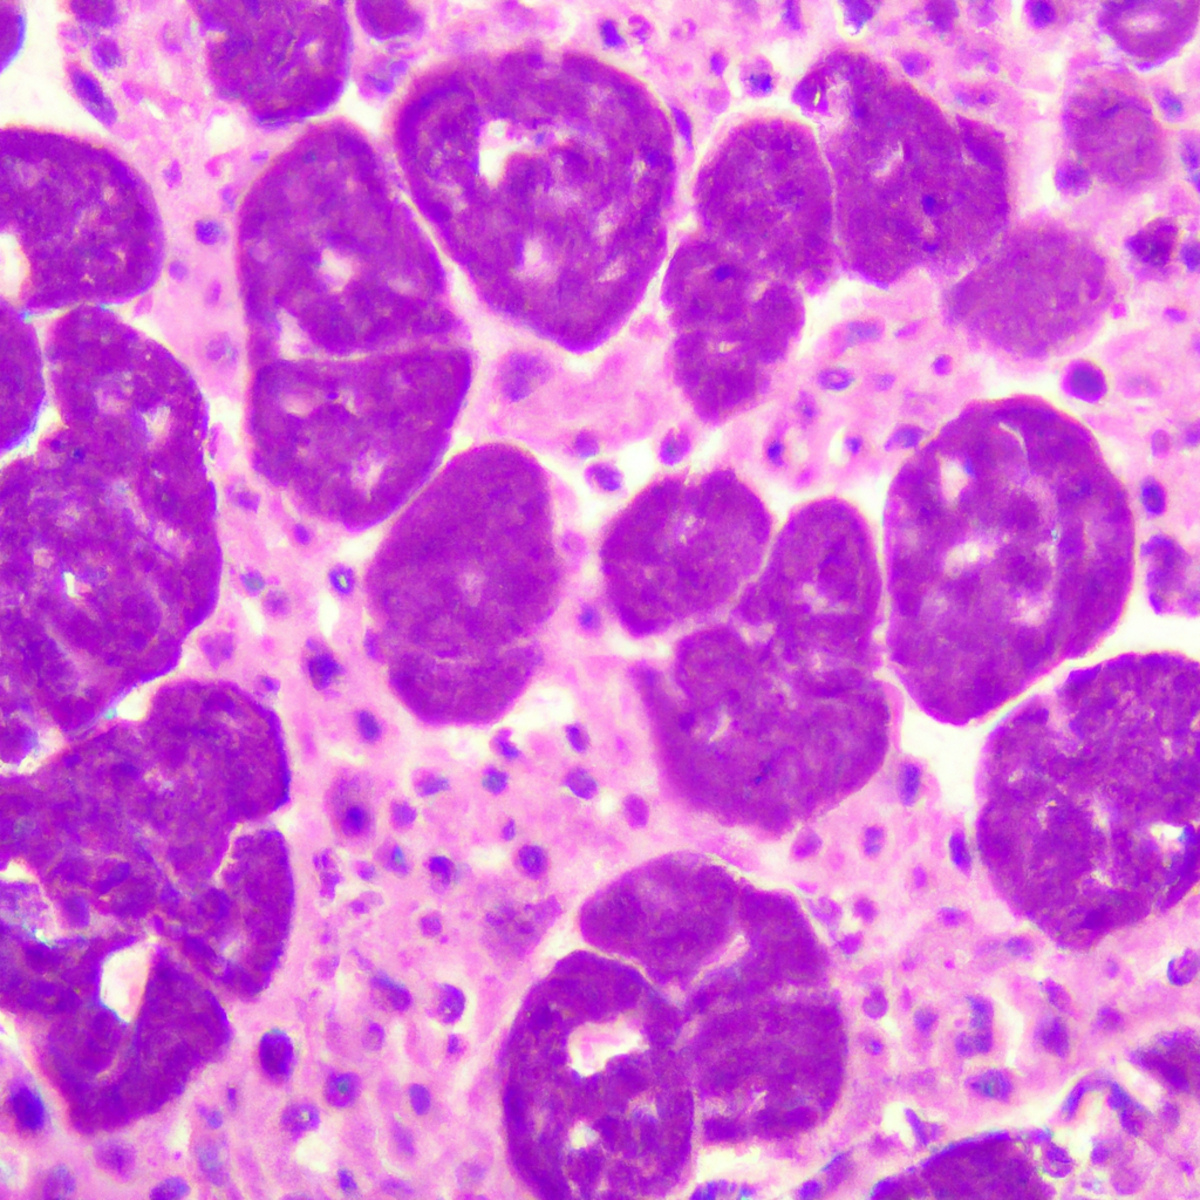 Microscopic view of purple and pink Pleuropulmonary Blastoma cells.